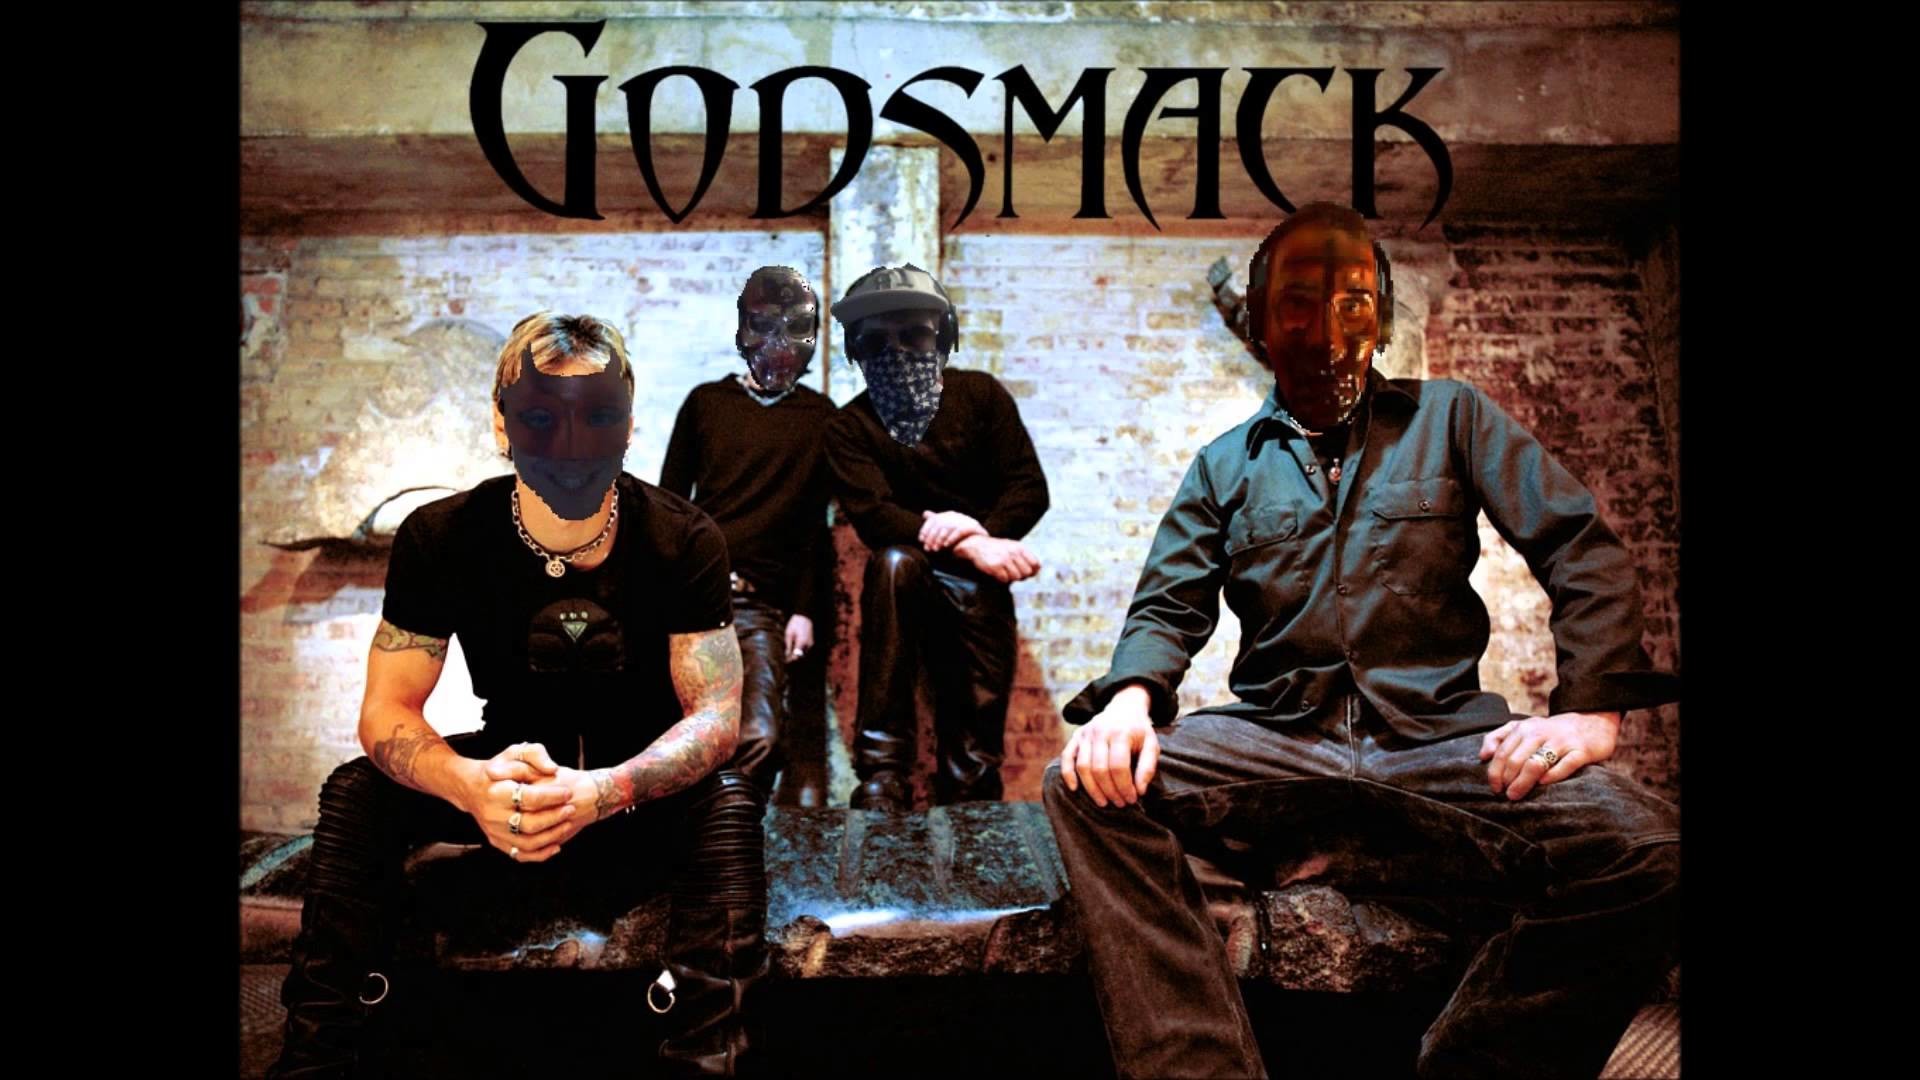 Godsmack voodoo lyrics